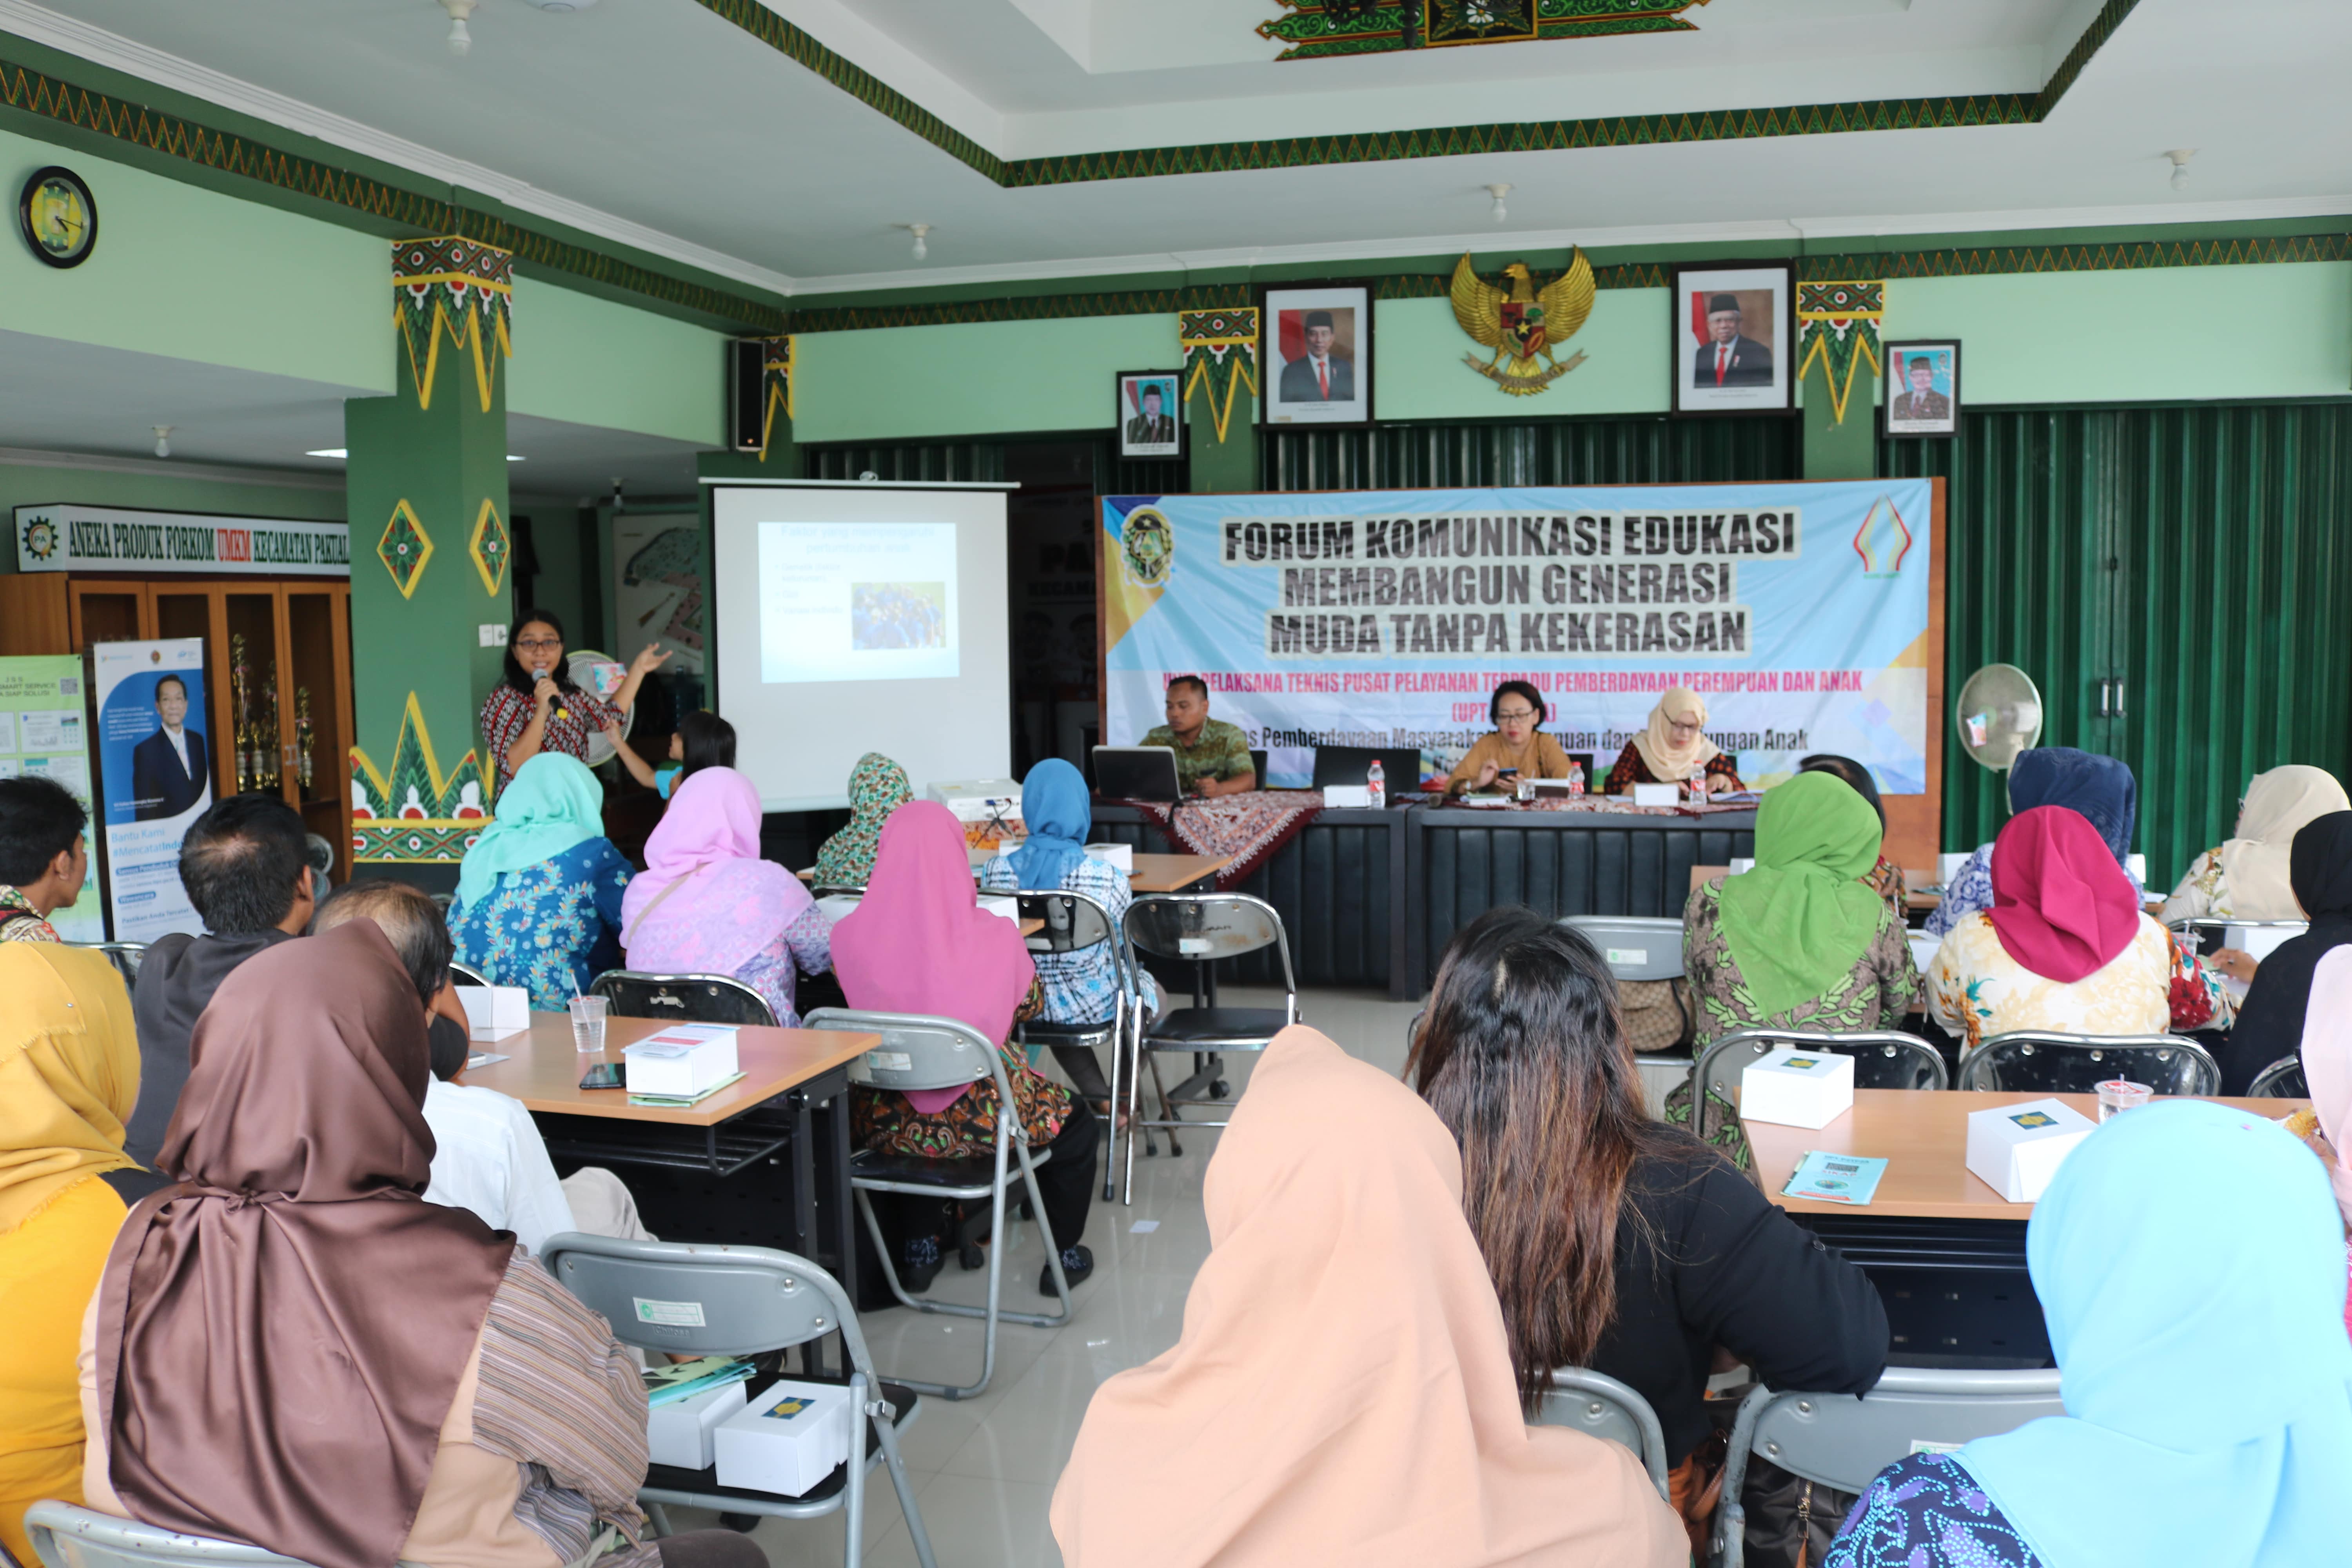 Forum komunikasi edukasi membangun generasi muda tanpa kekerasan di kecamatan Pakualaman.